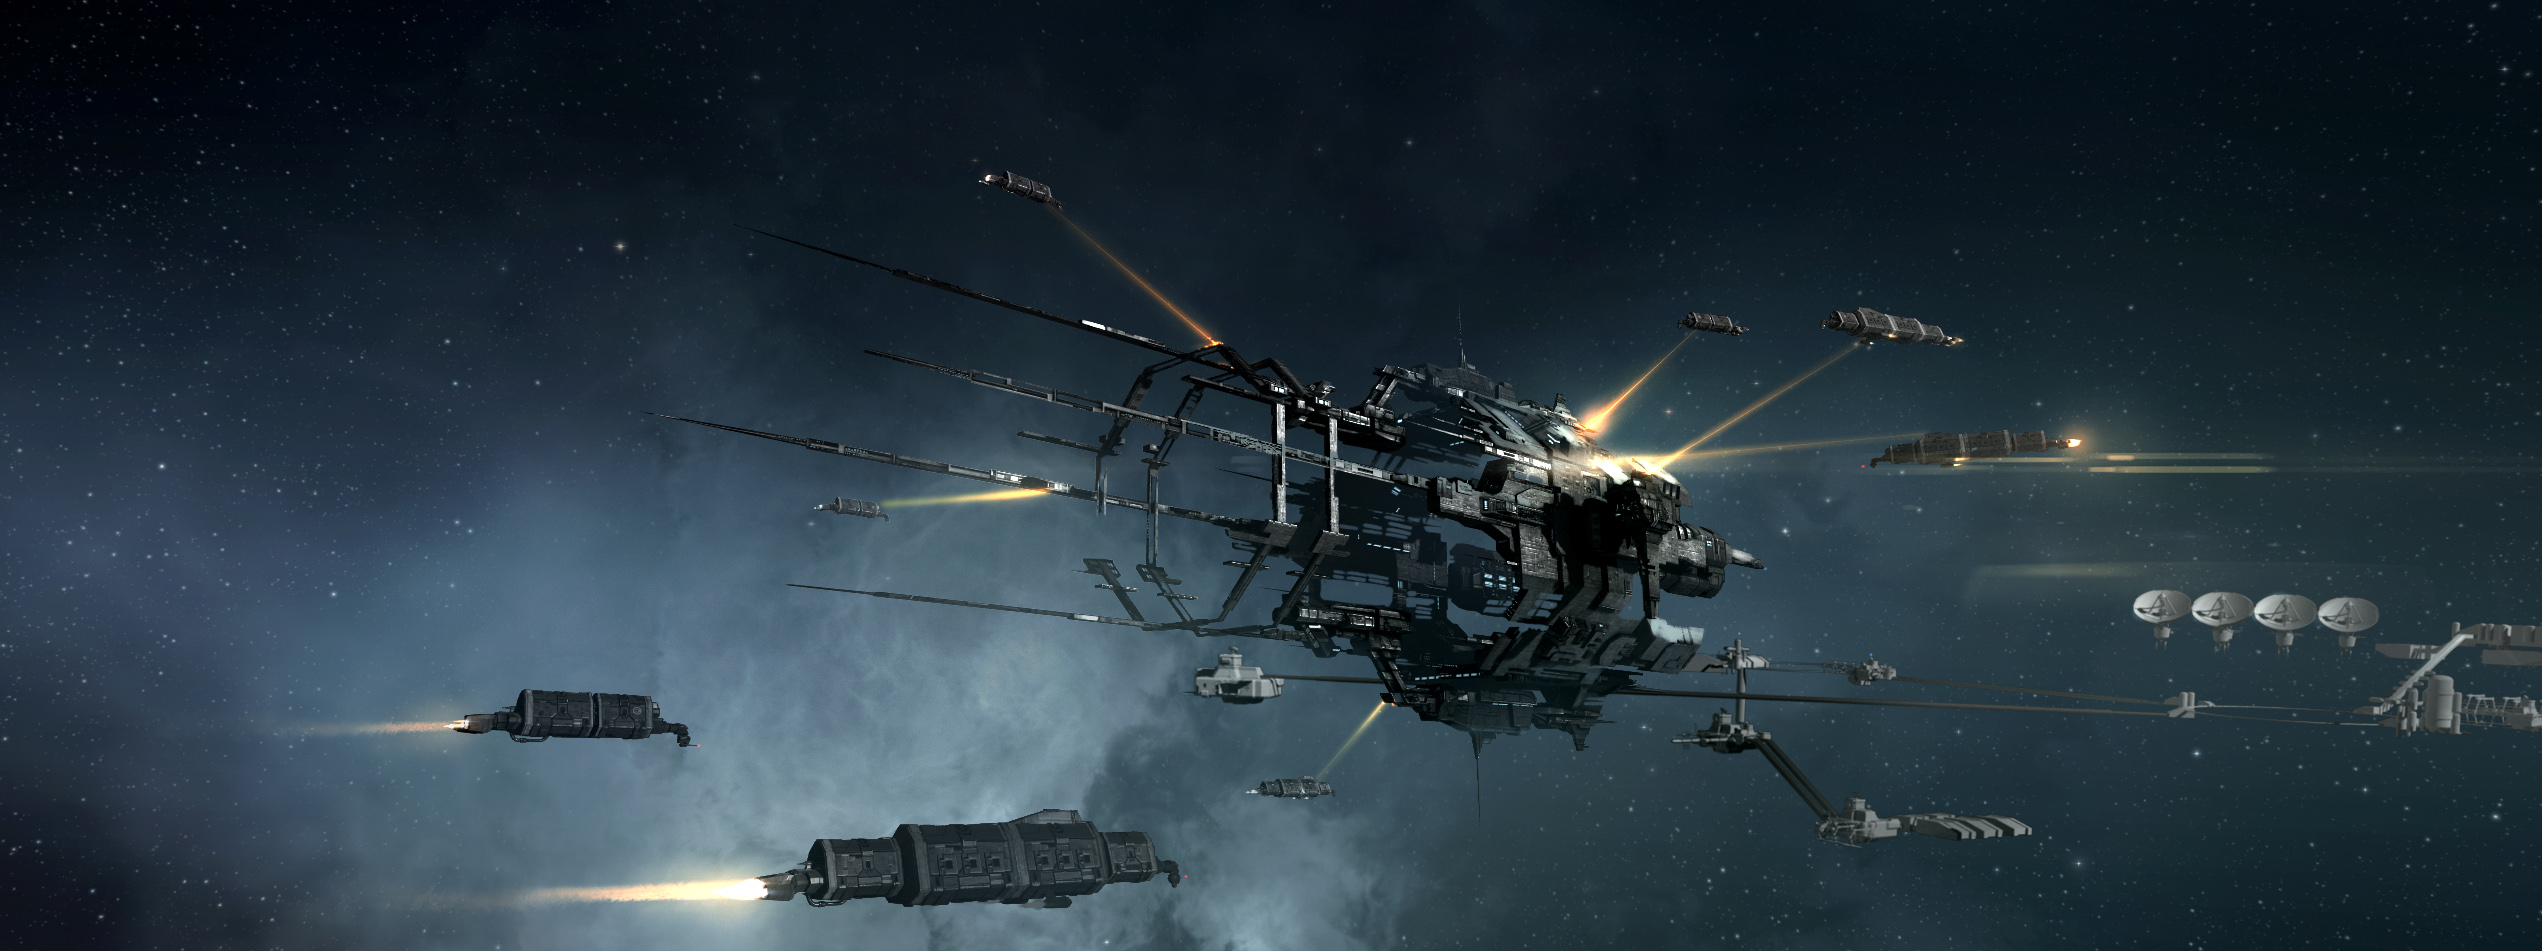 Eve Online Sci Fi Game Spaceship Yr Wallpaper